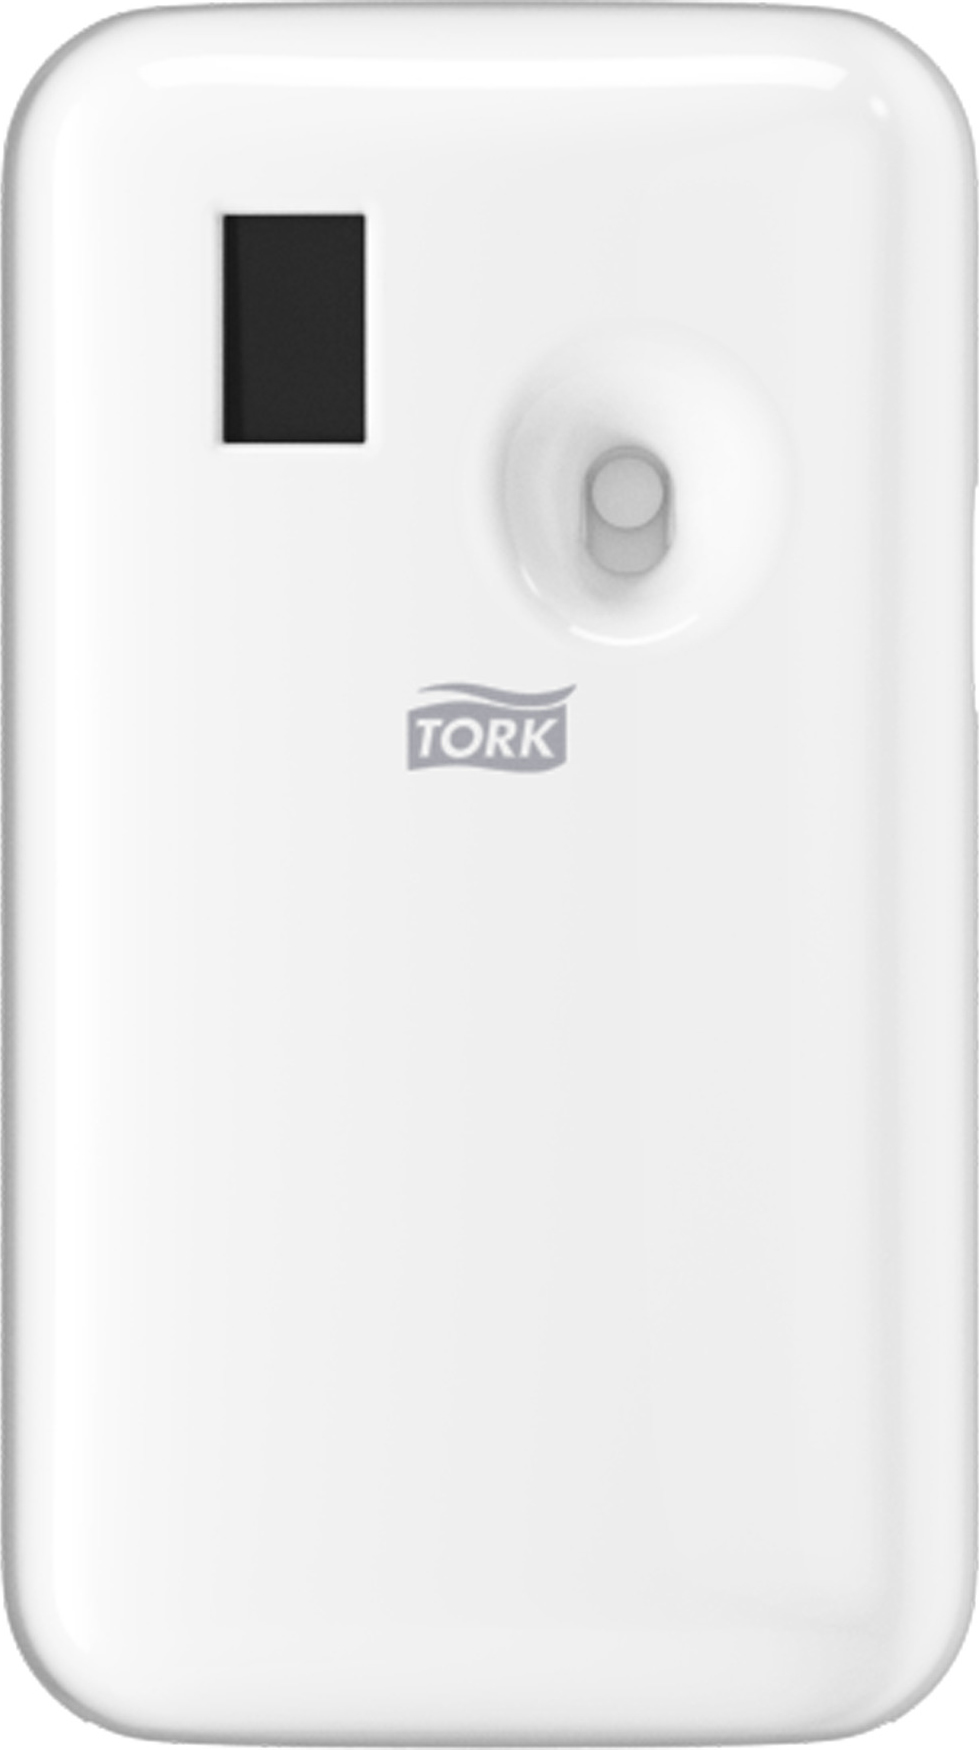 [2256111] Dispenser Tork Airfresh A1 vit